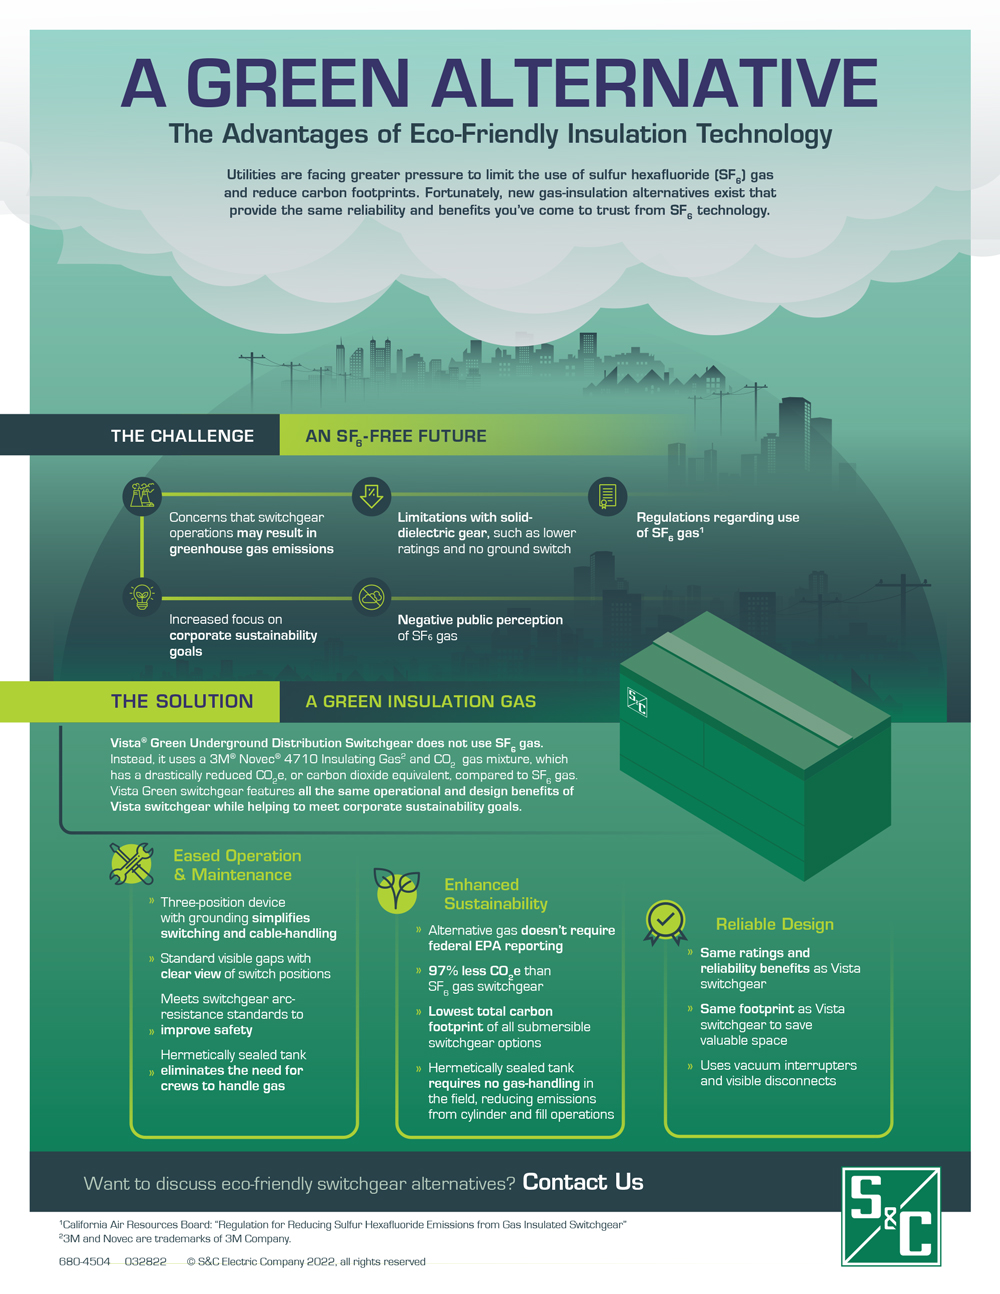 A Green Alternative Infographic